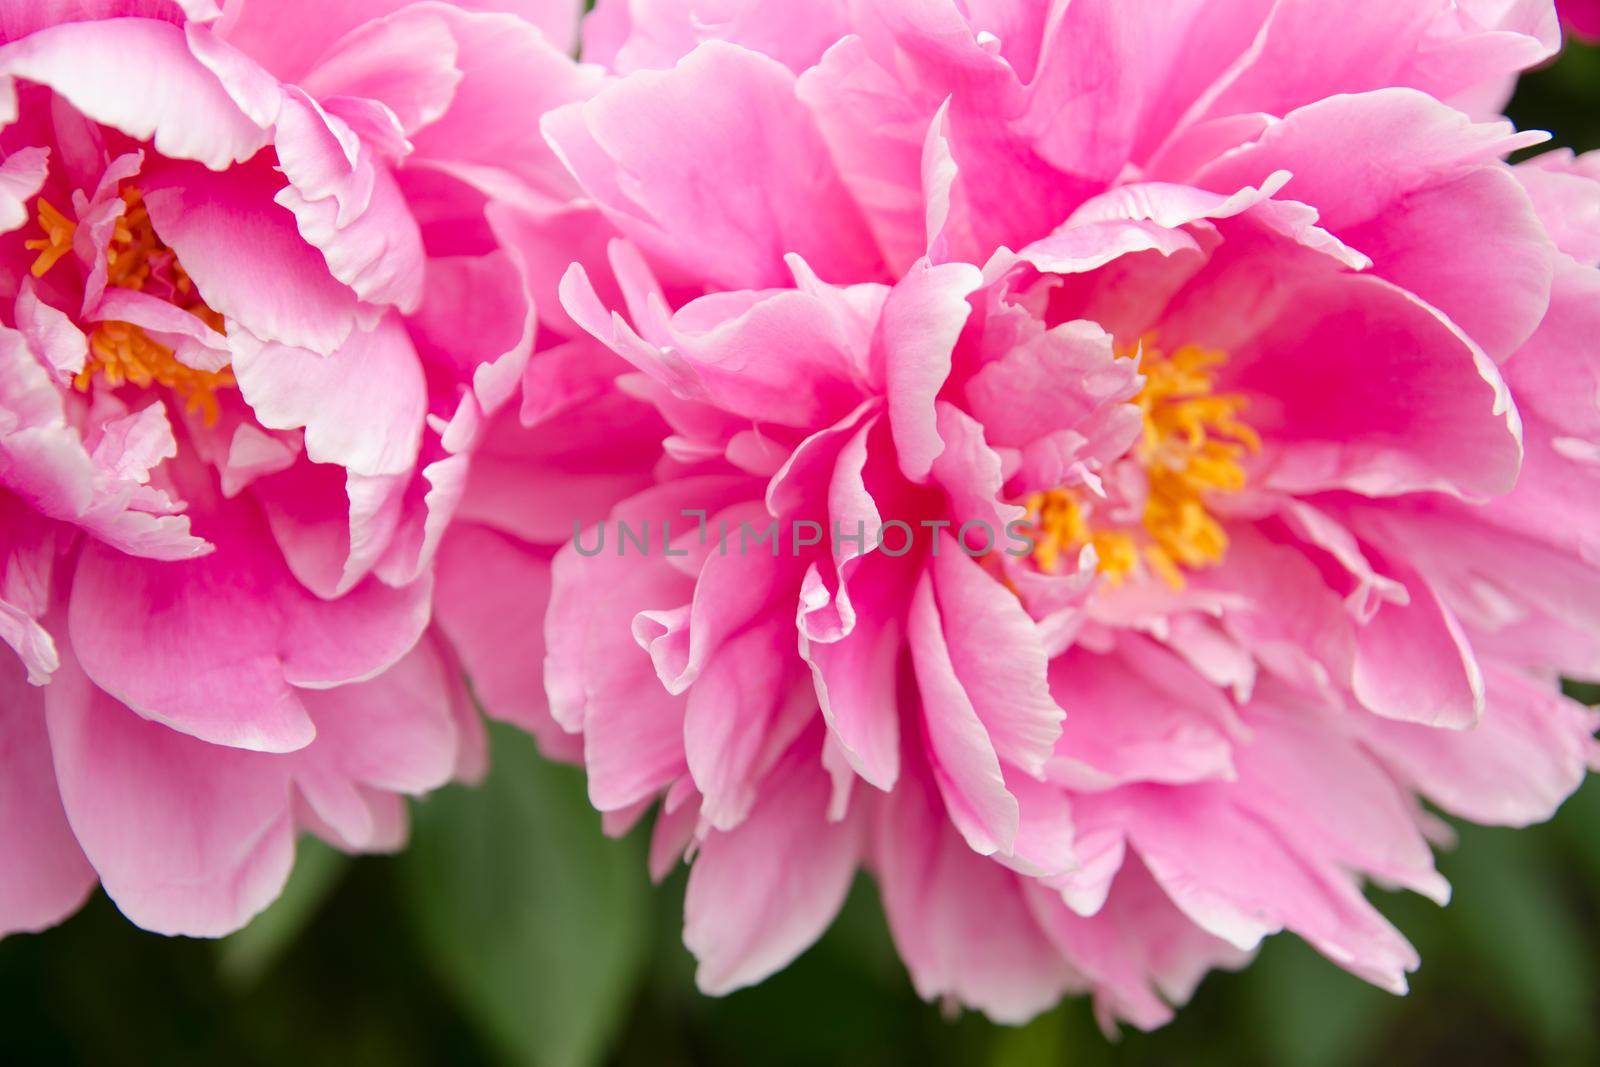 Mackro pink peony Flower Backdrop. Fine Art Natural Floral Photo Digital Studio Background for Portrait, Best for cute family photos, atmospheric newborn designs. Textures Overlays